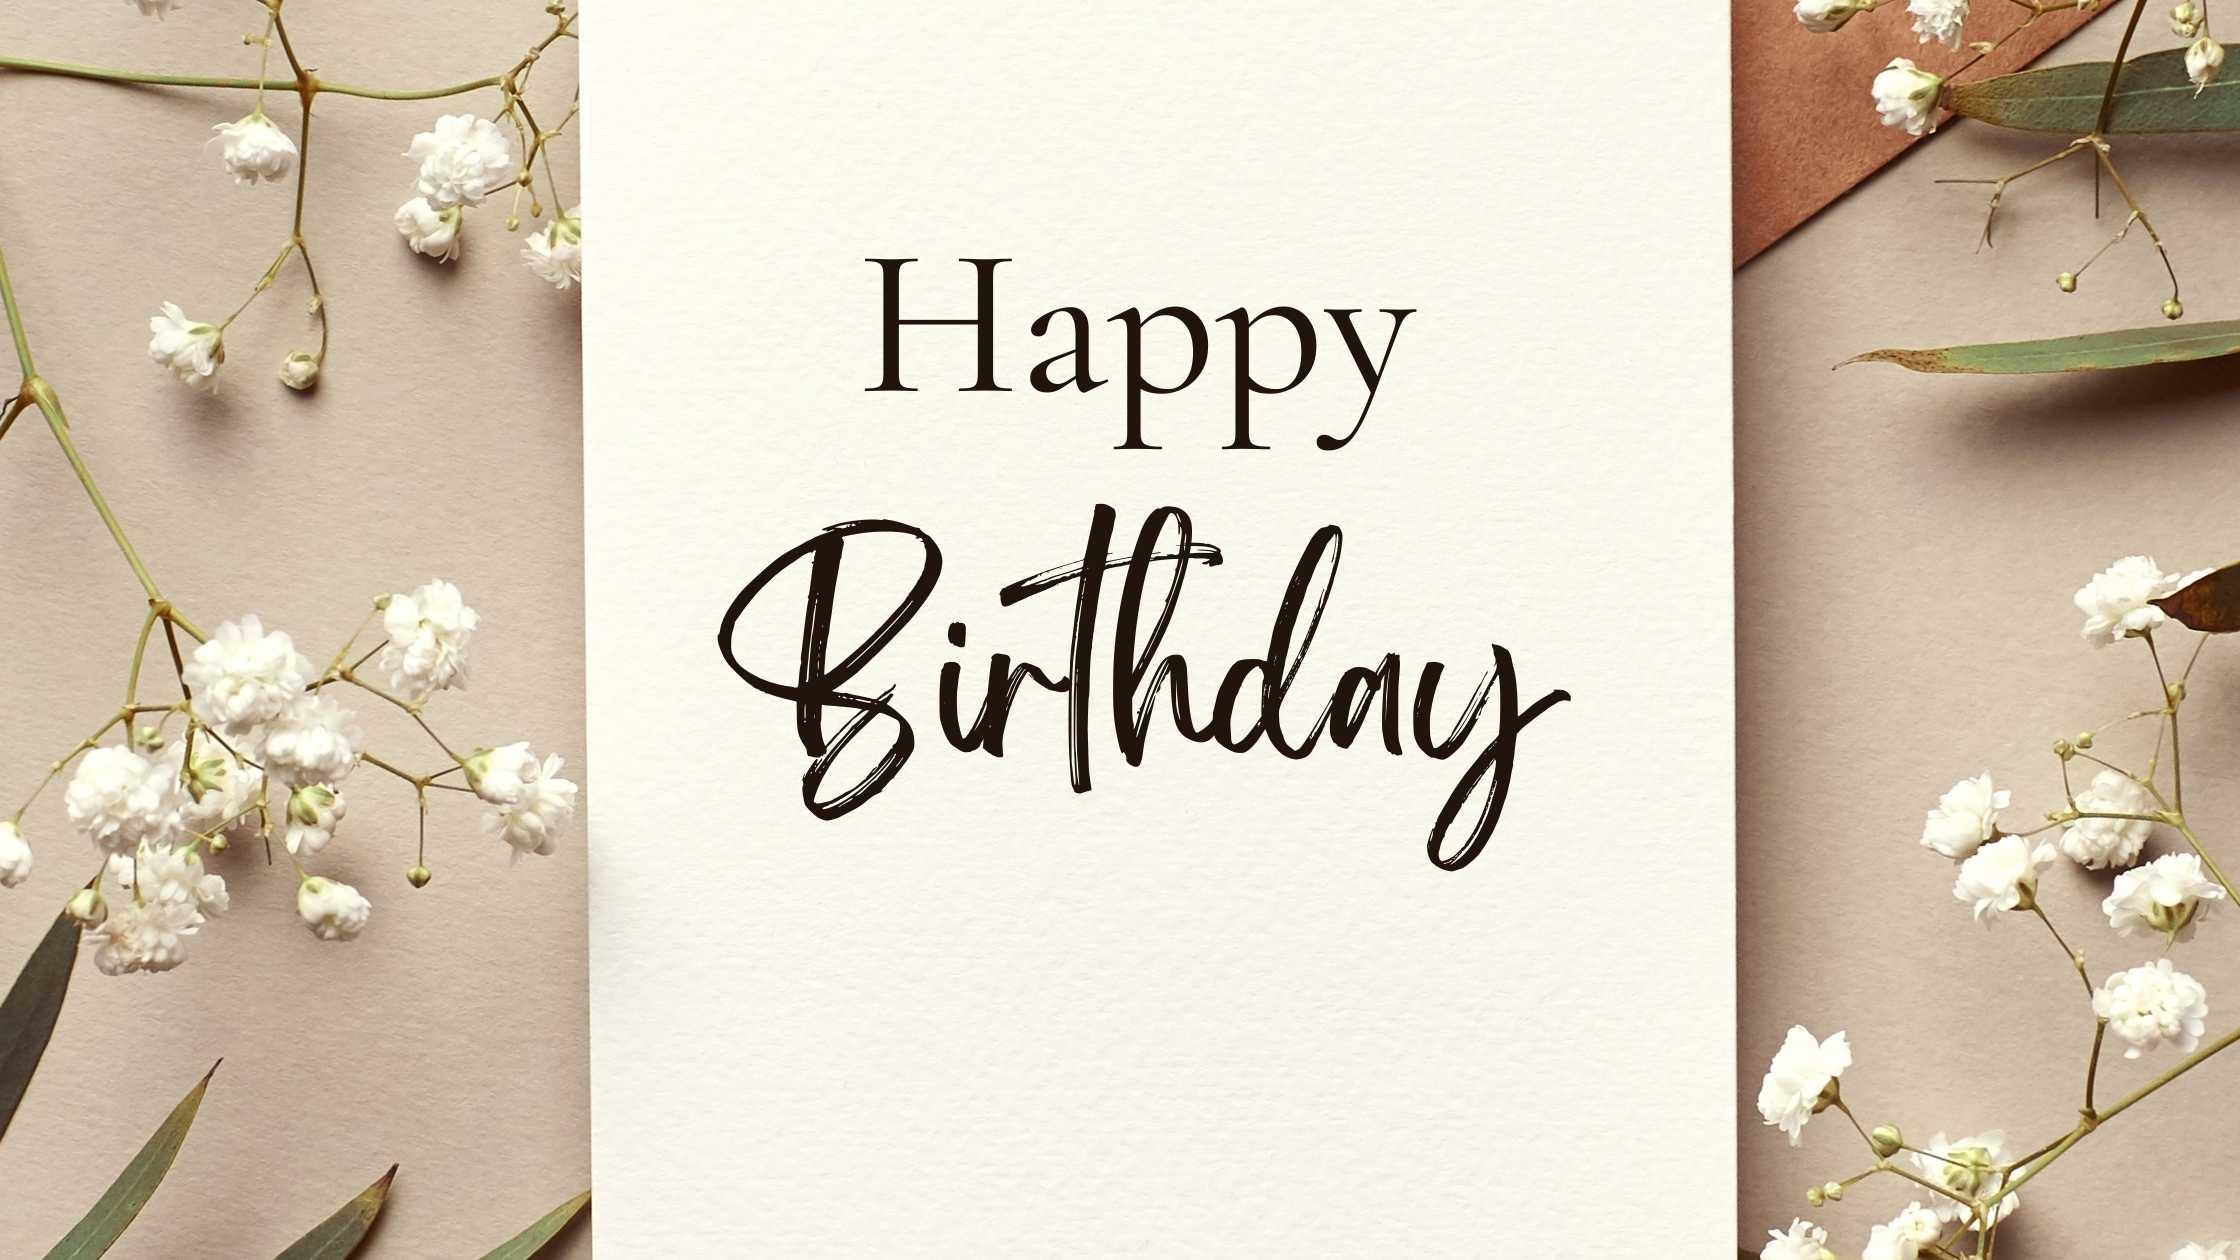 Happy Birthday, Kristen Bernard!